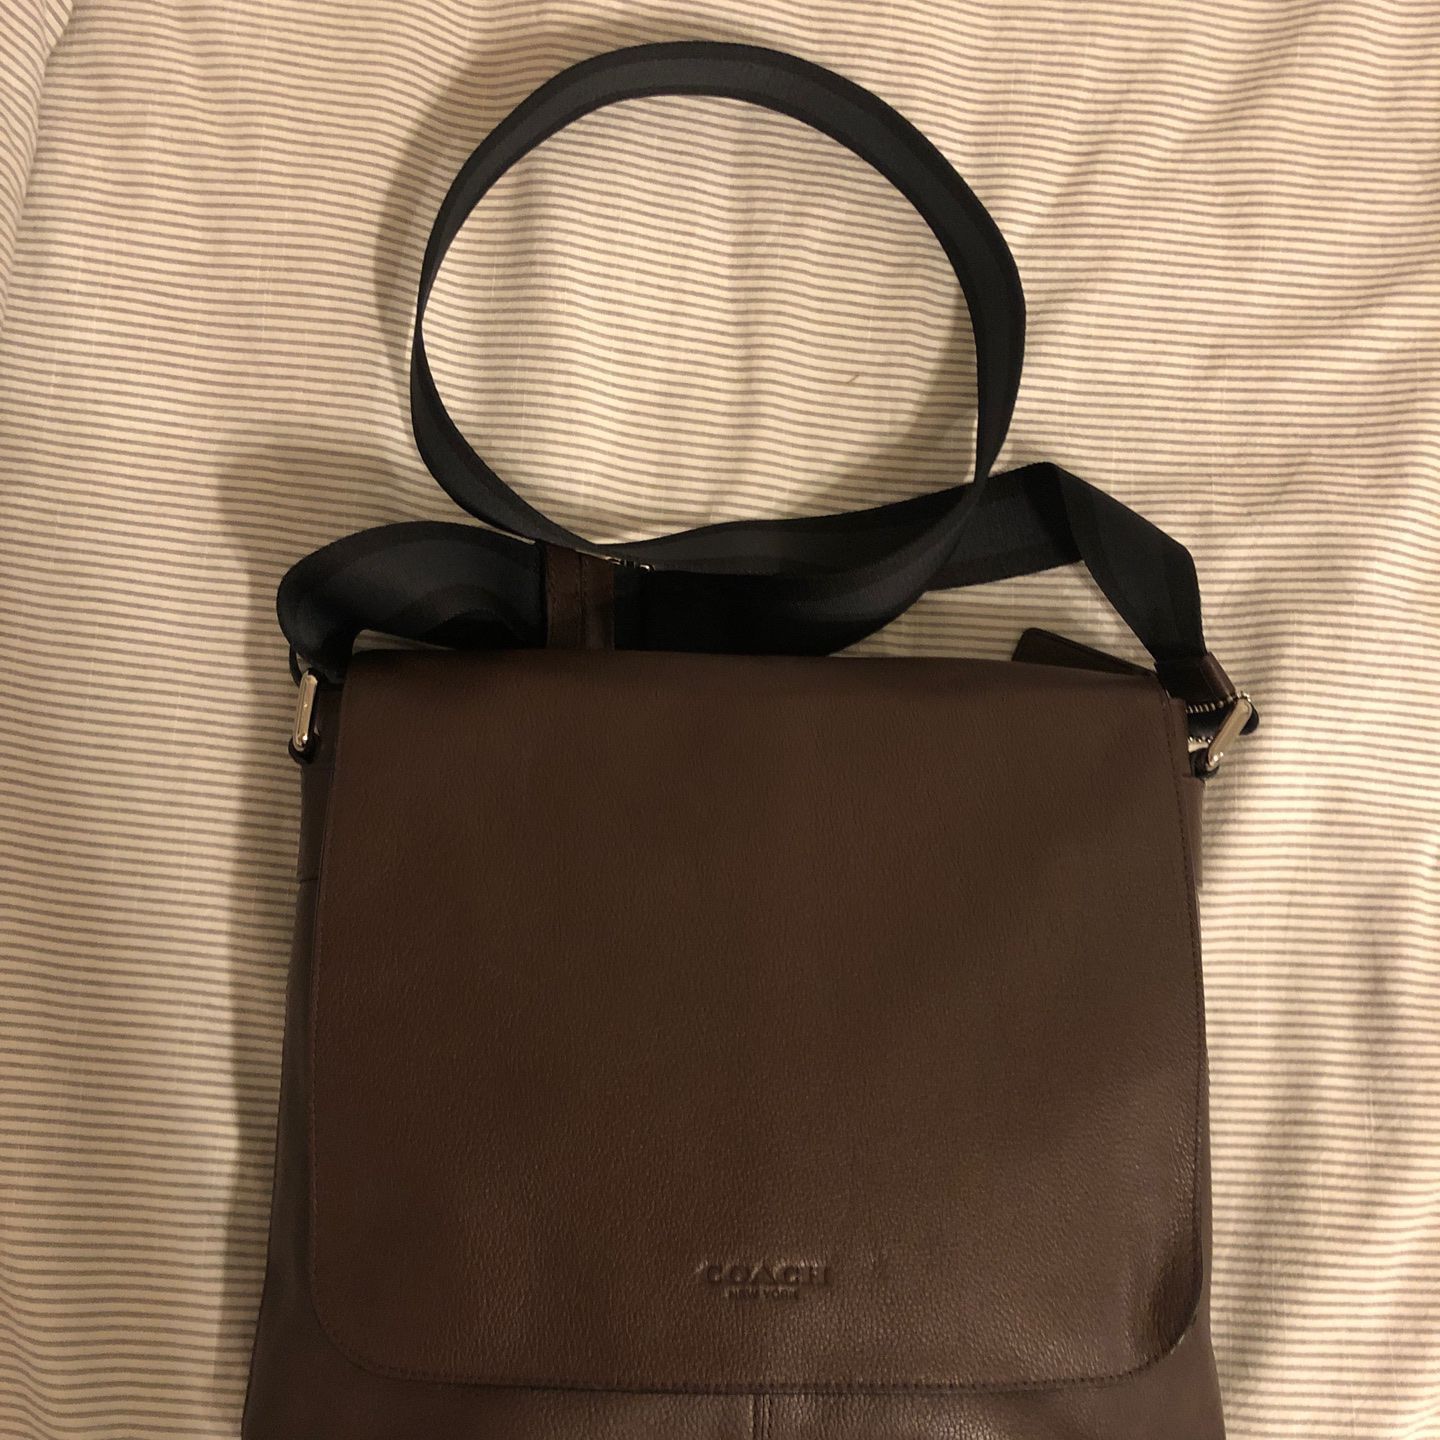 COACH: Authentic mens Brown leather Messenger bag